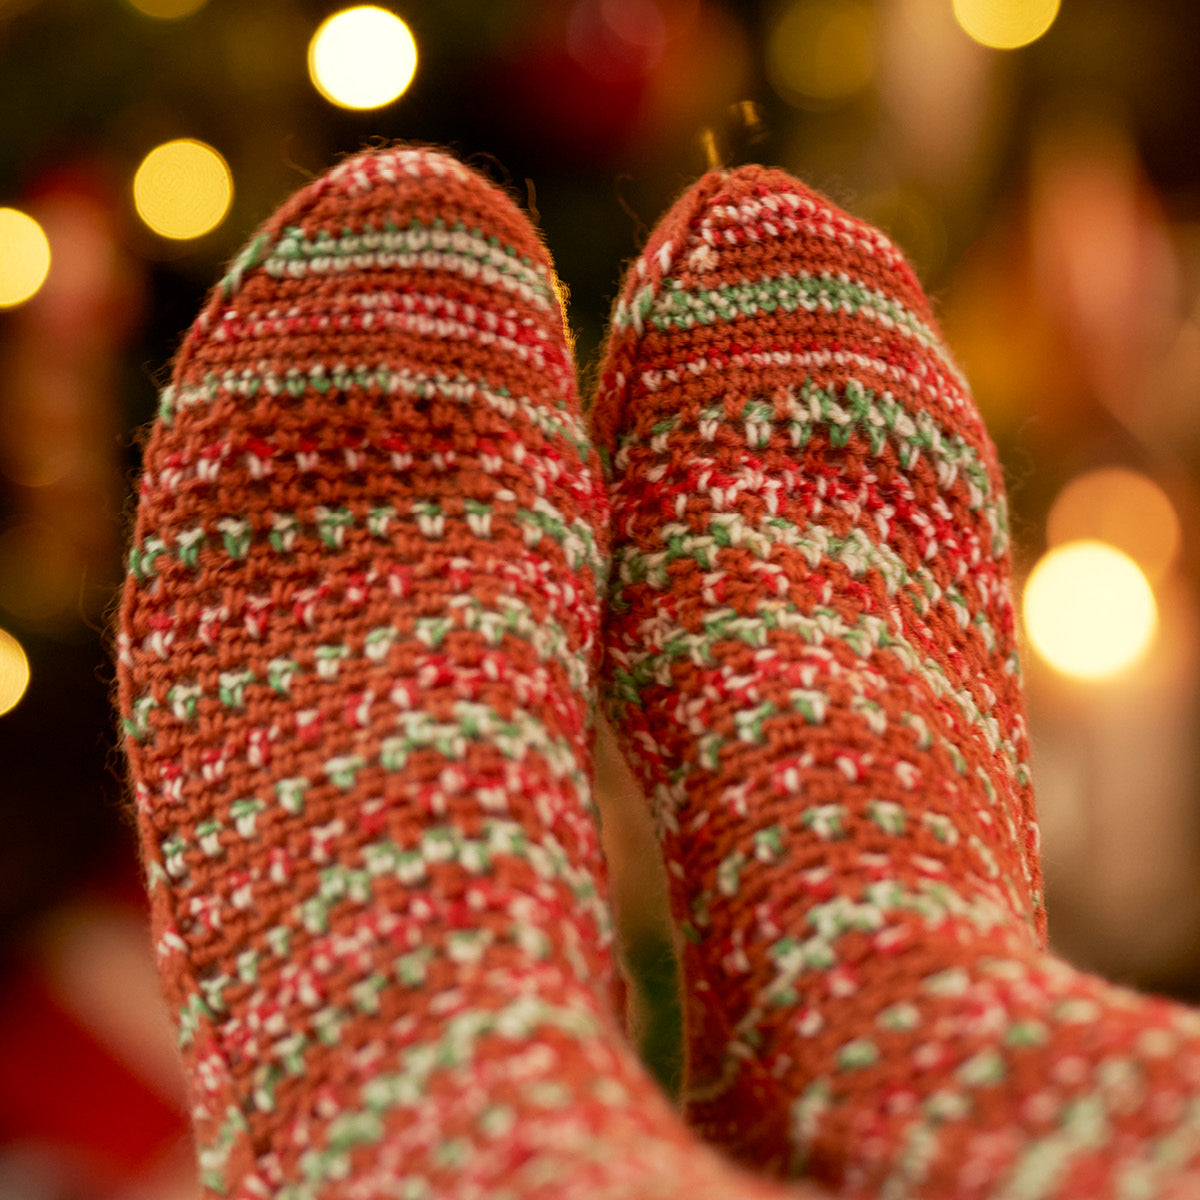 WYS Clementine - Christmas Crochet Sock Pattern (PDF Download)